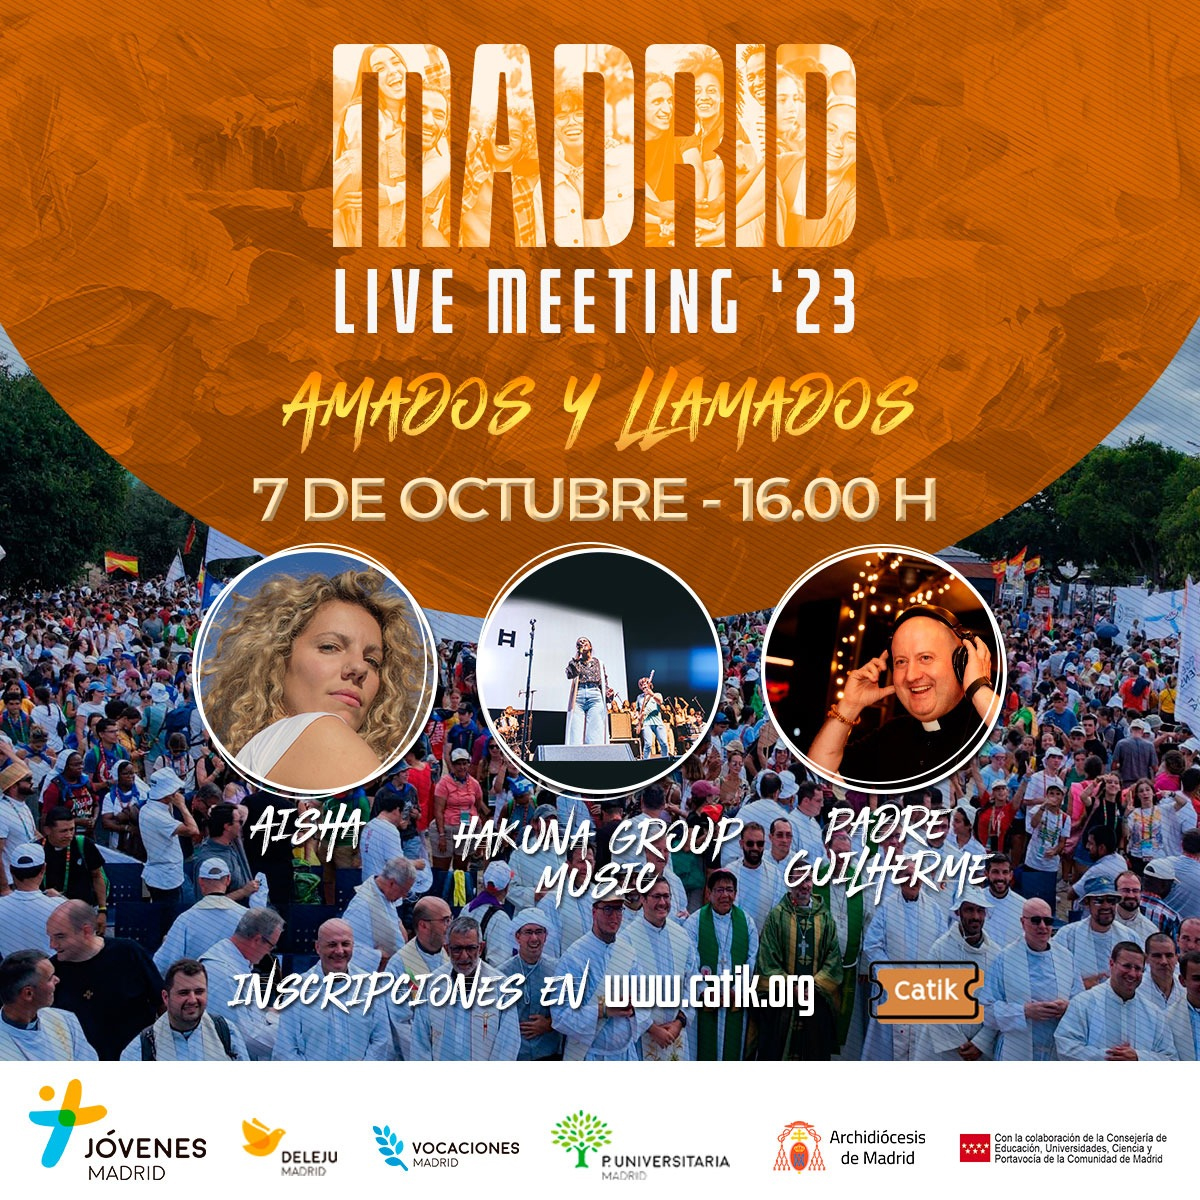 MADRID LIVE MEETING '23